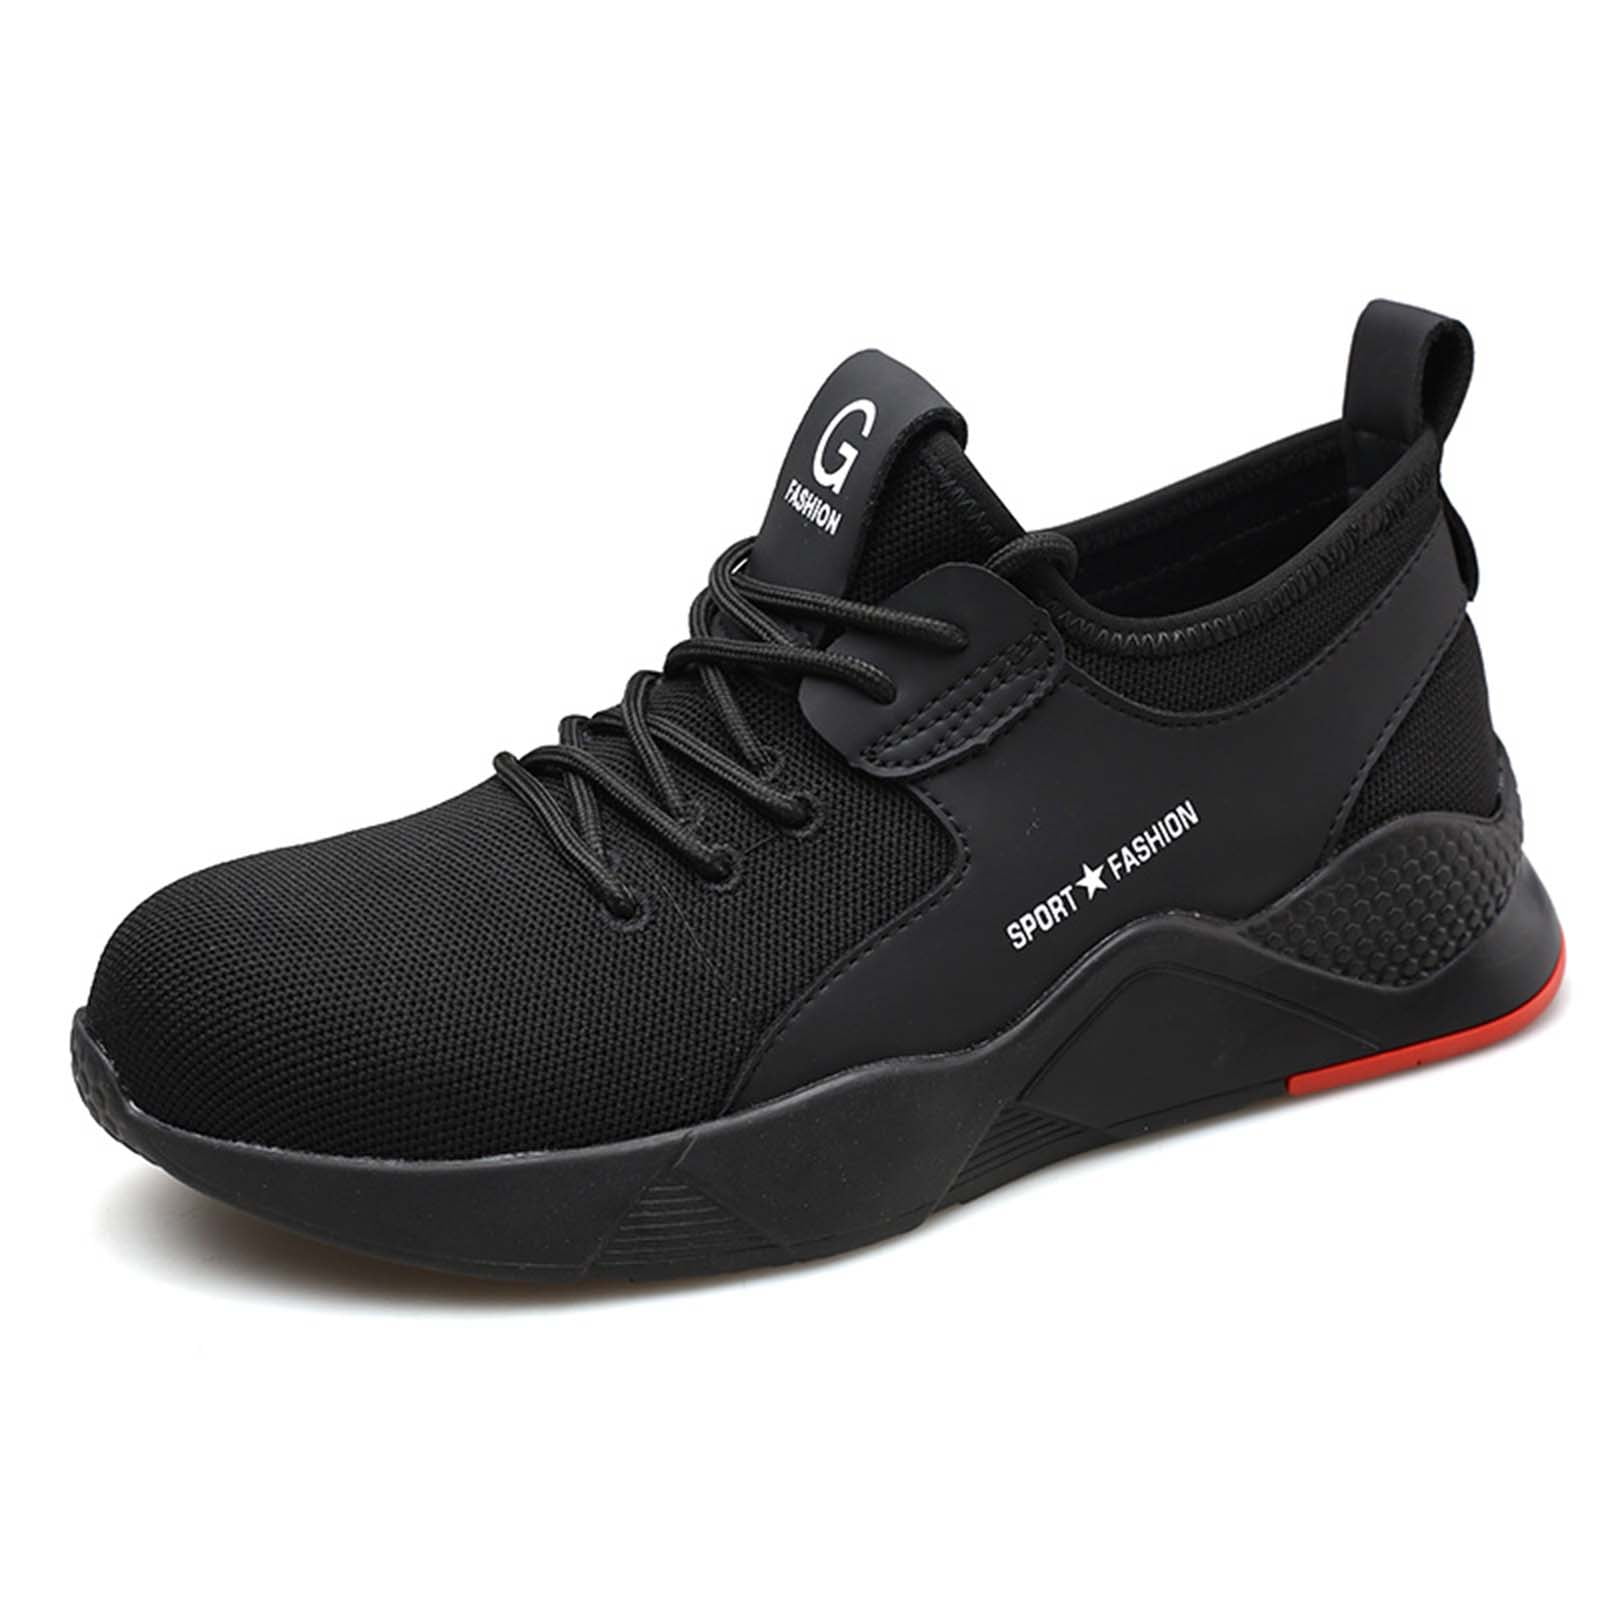 Details about   LARNMERN Work Shoes Steel Safety Boots Men Lightweight Indestructible Sneaker 